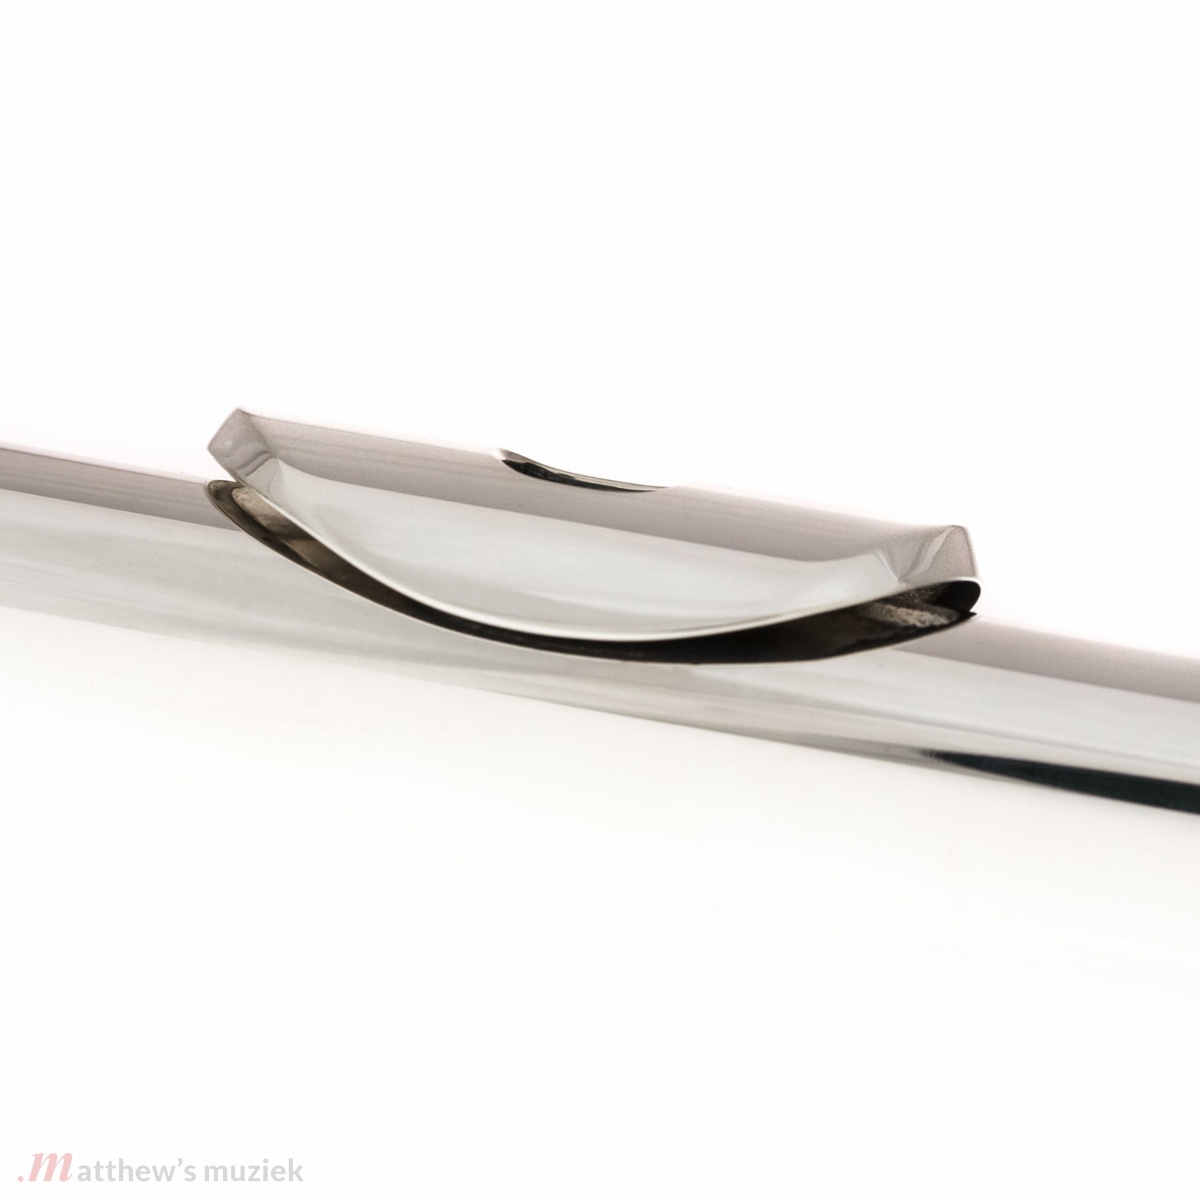 Anton Vroom Flute Headjoint - Sterling Silver - Style 1